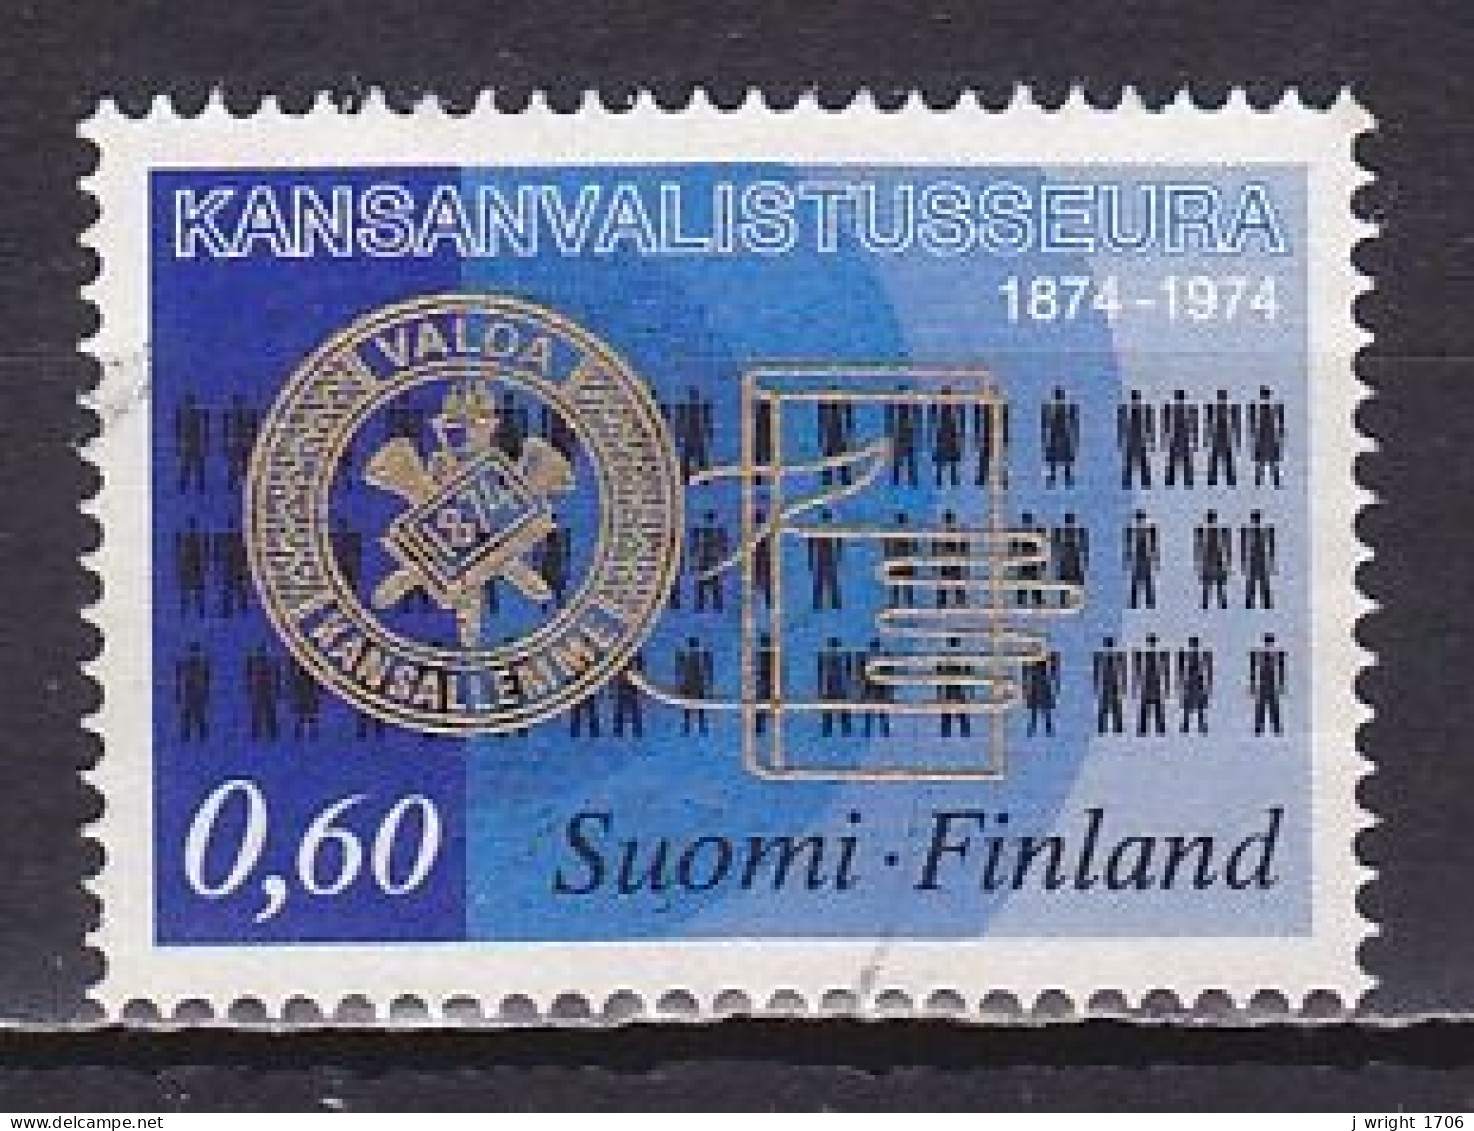 Finland, 1974, Adult Education Centenary, 0.60mk, USED - Usati